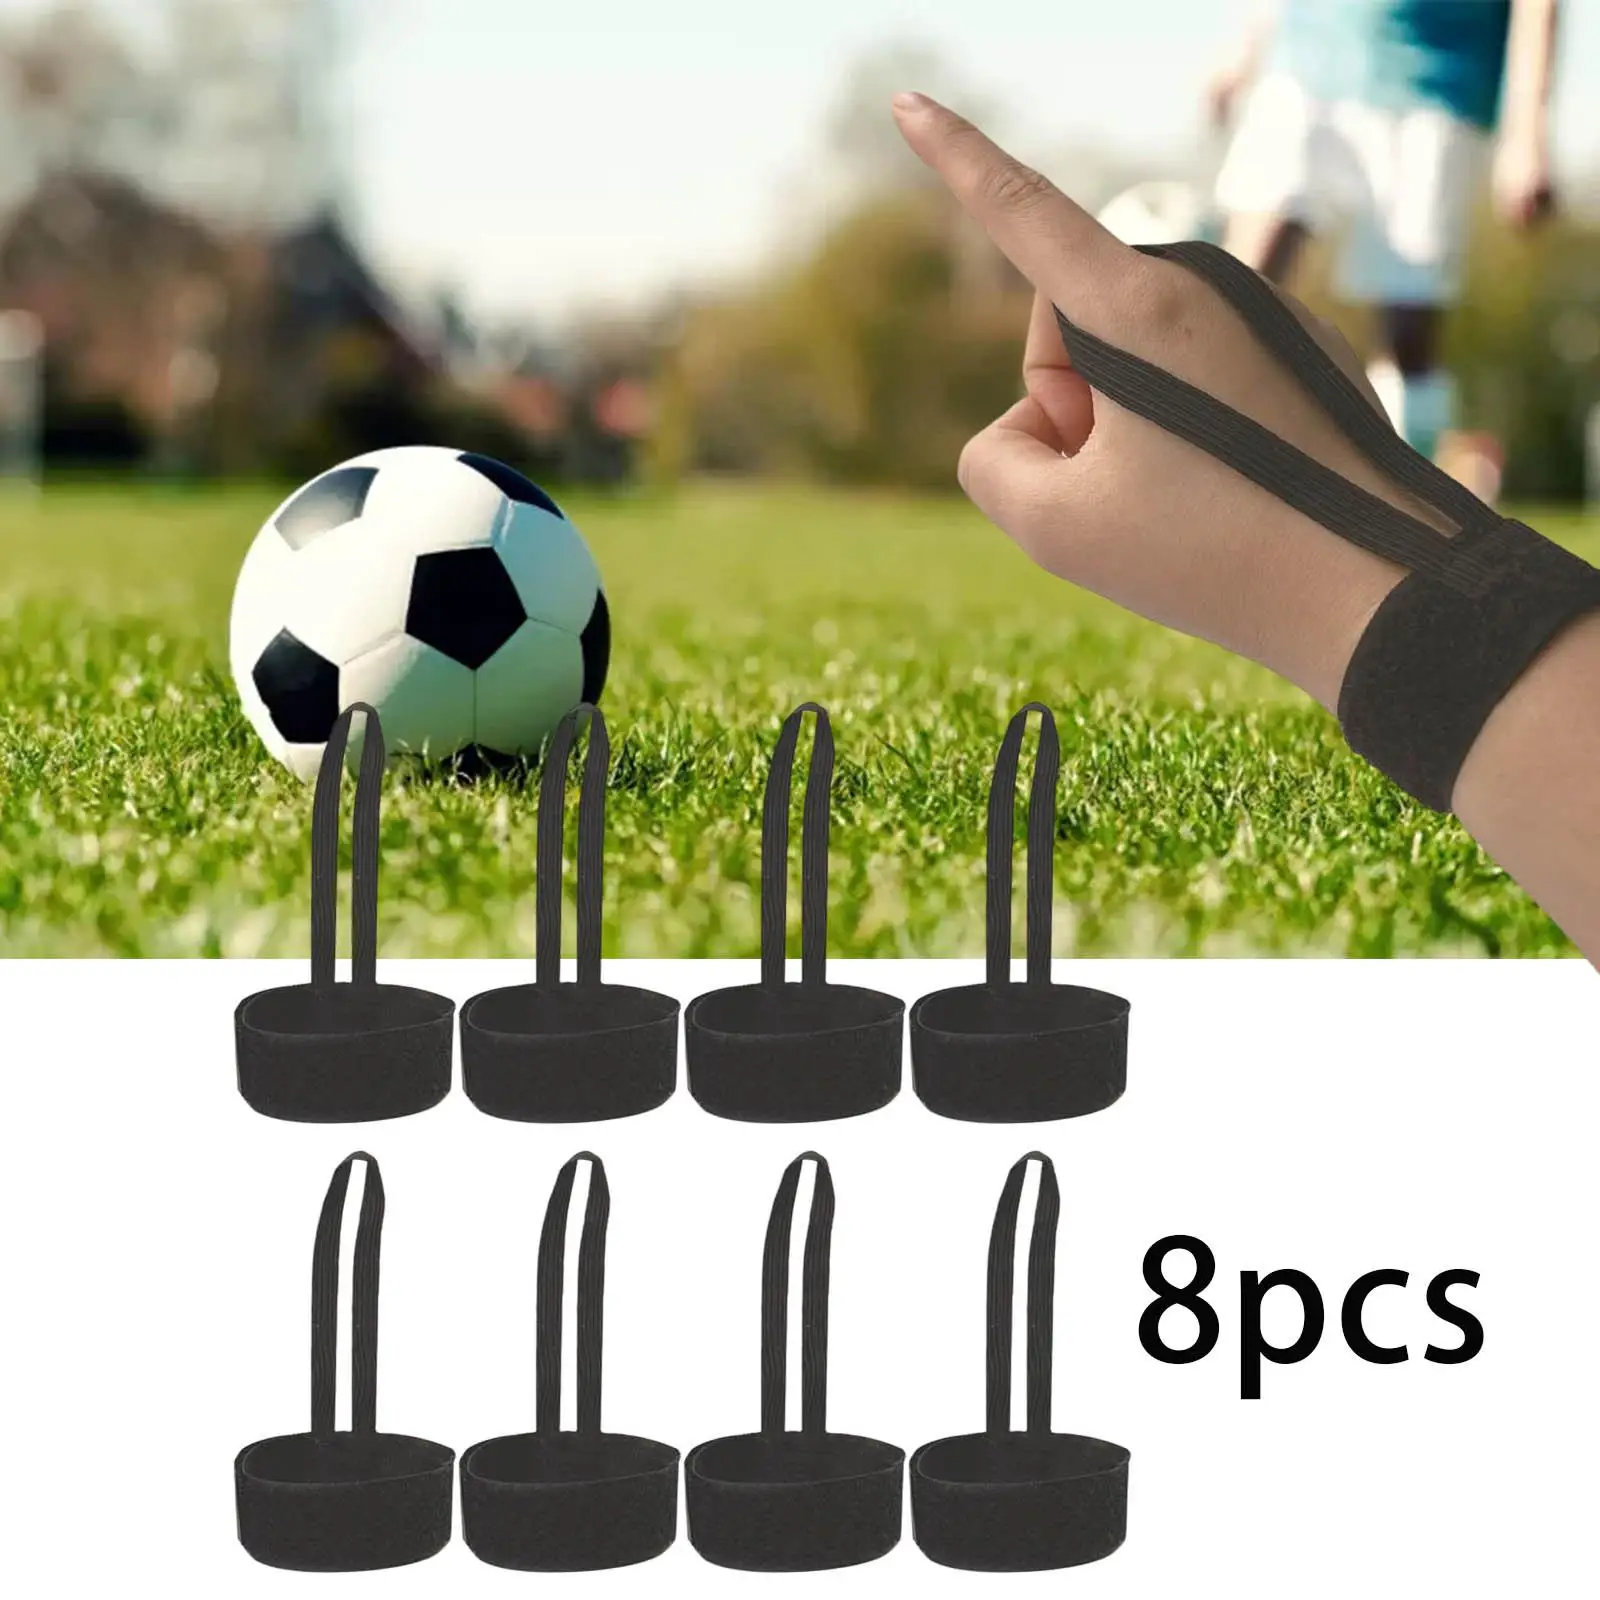 8Pcs Referee Wristbands Adjustable Sports Football Down Indicator Wrist